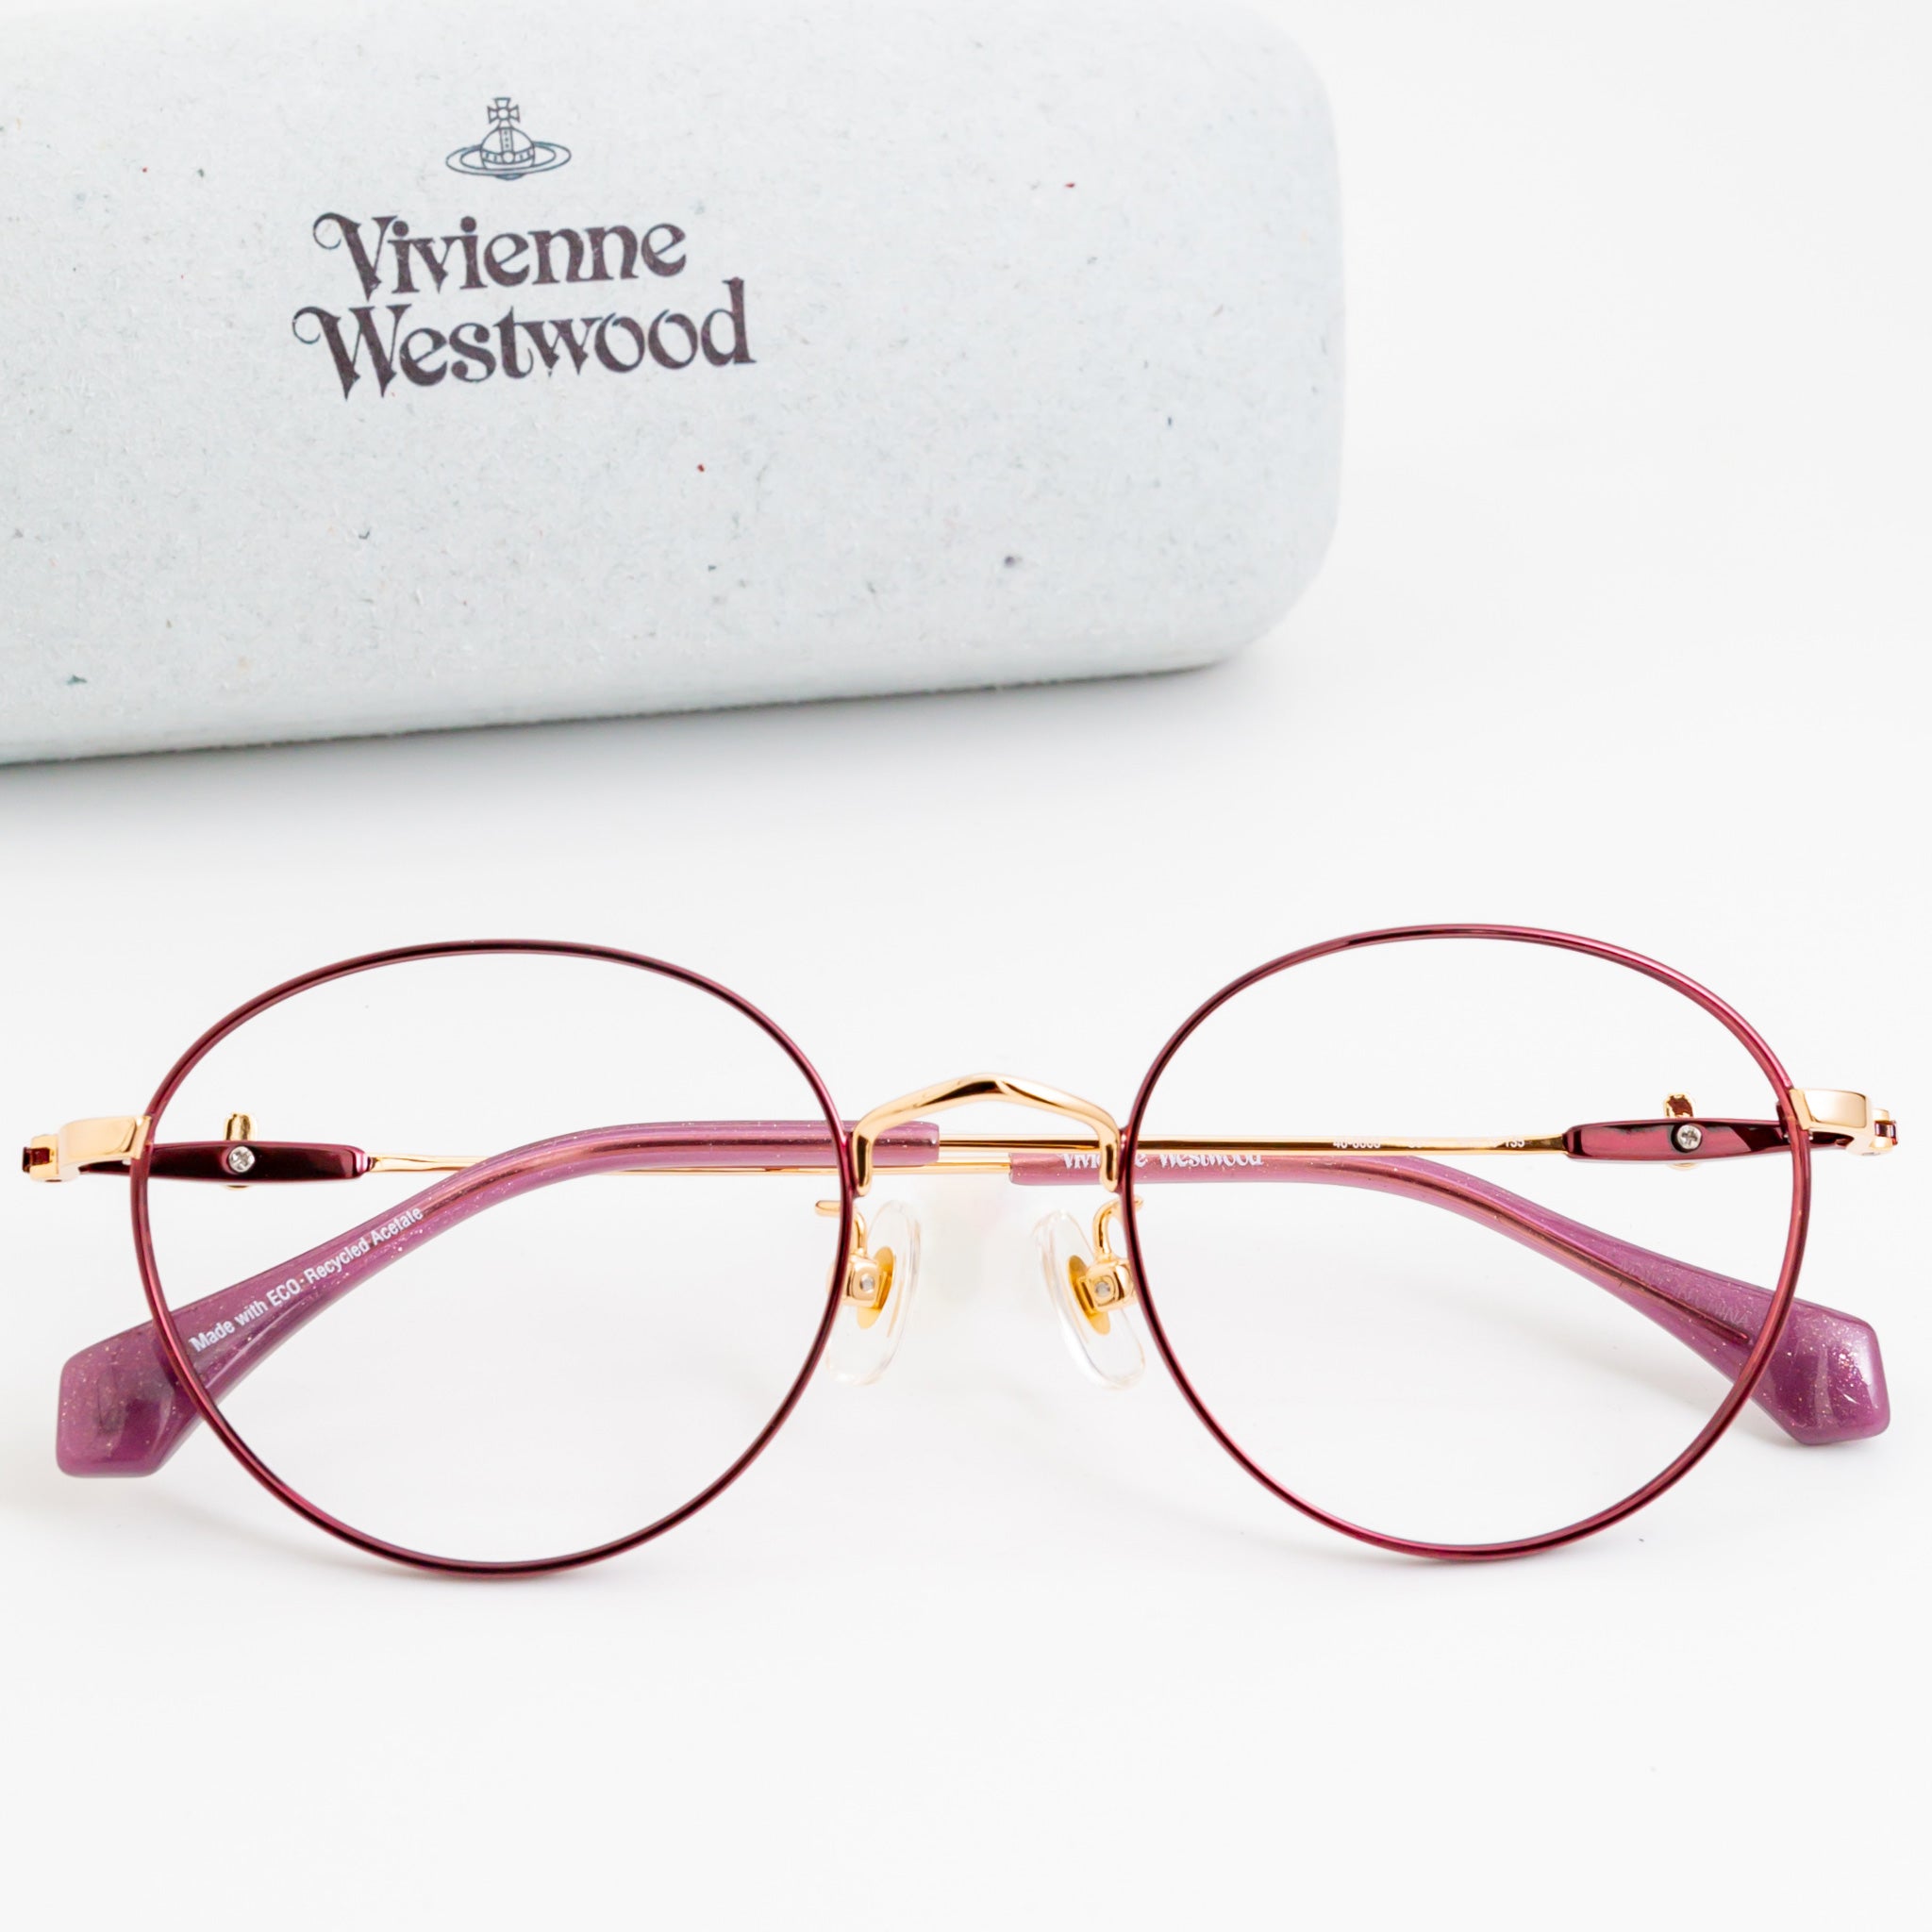 Vivienne Westwood 眼鏡 ケース付 40-0003 C.1Vivienne